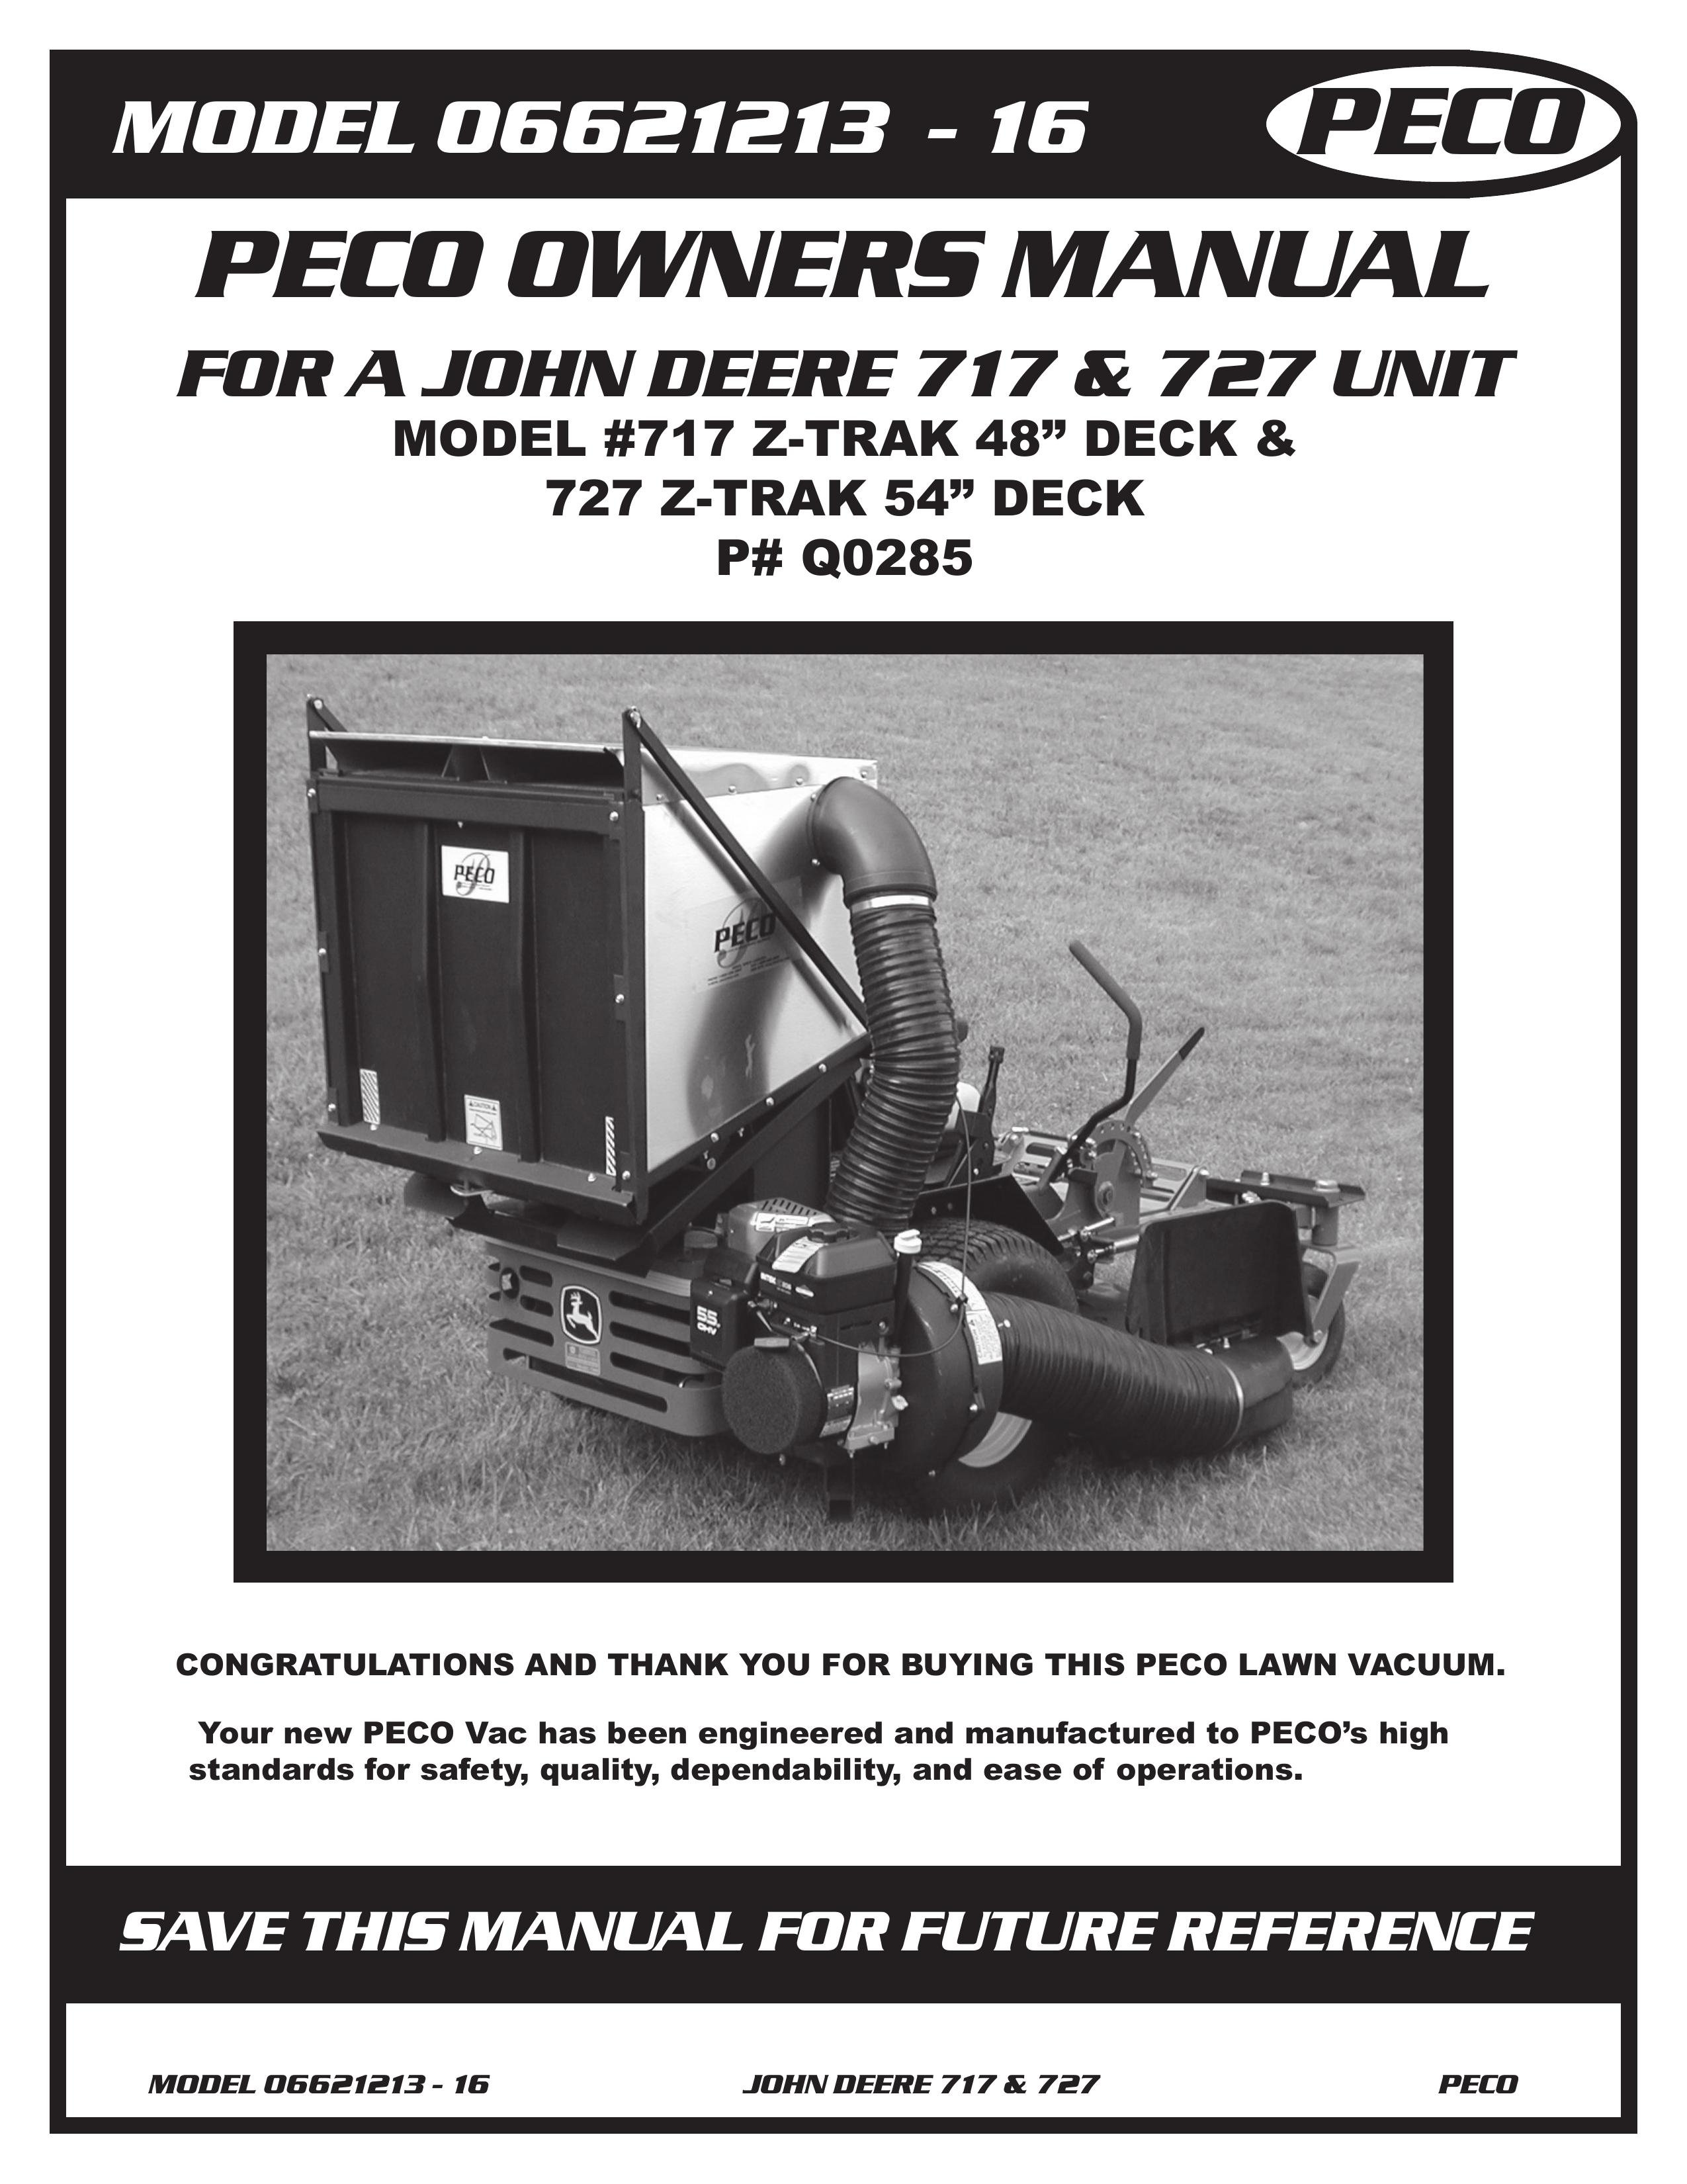 John Deere 727 Z-TRAK Lawn Mower User Manual